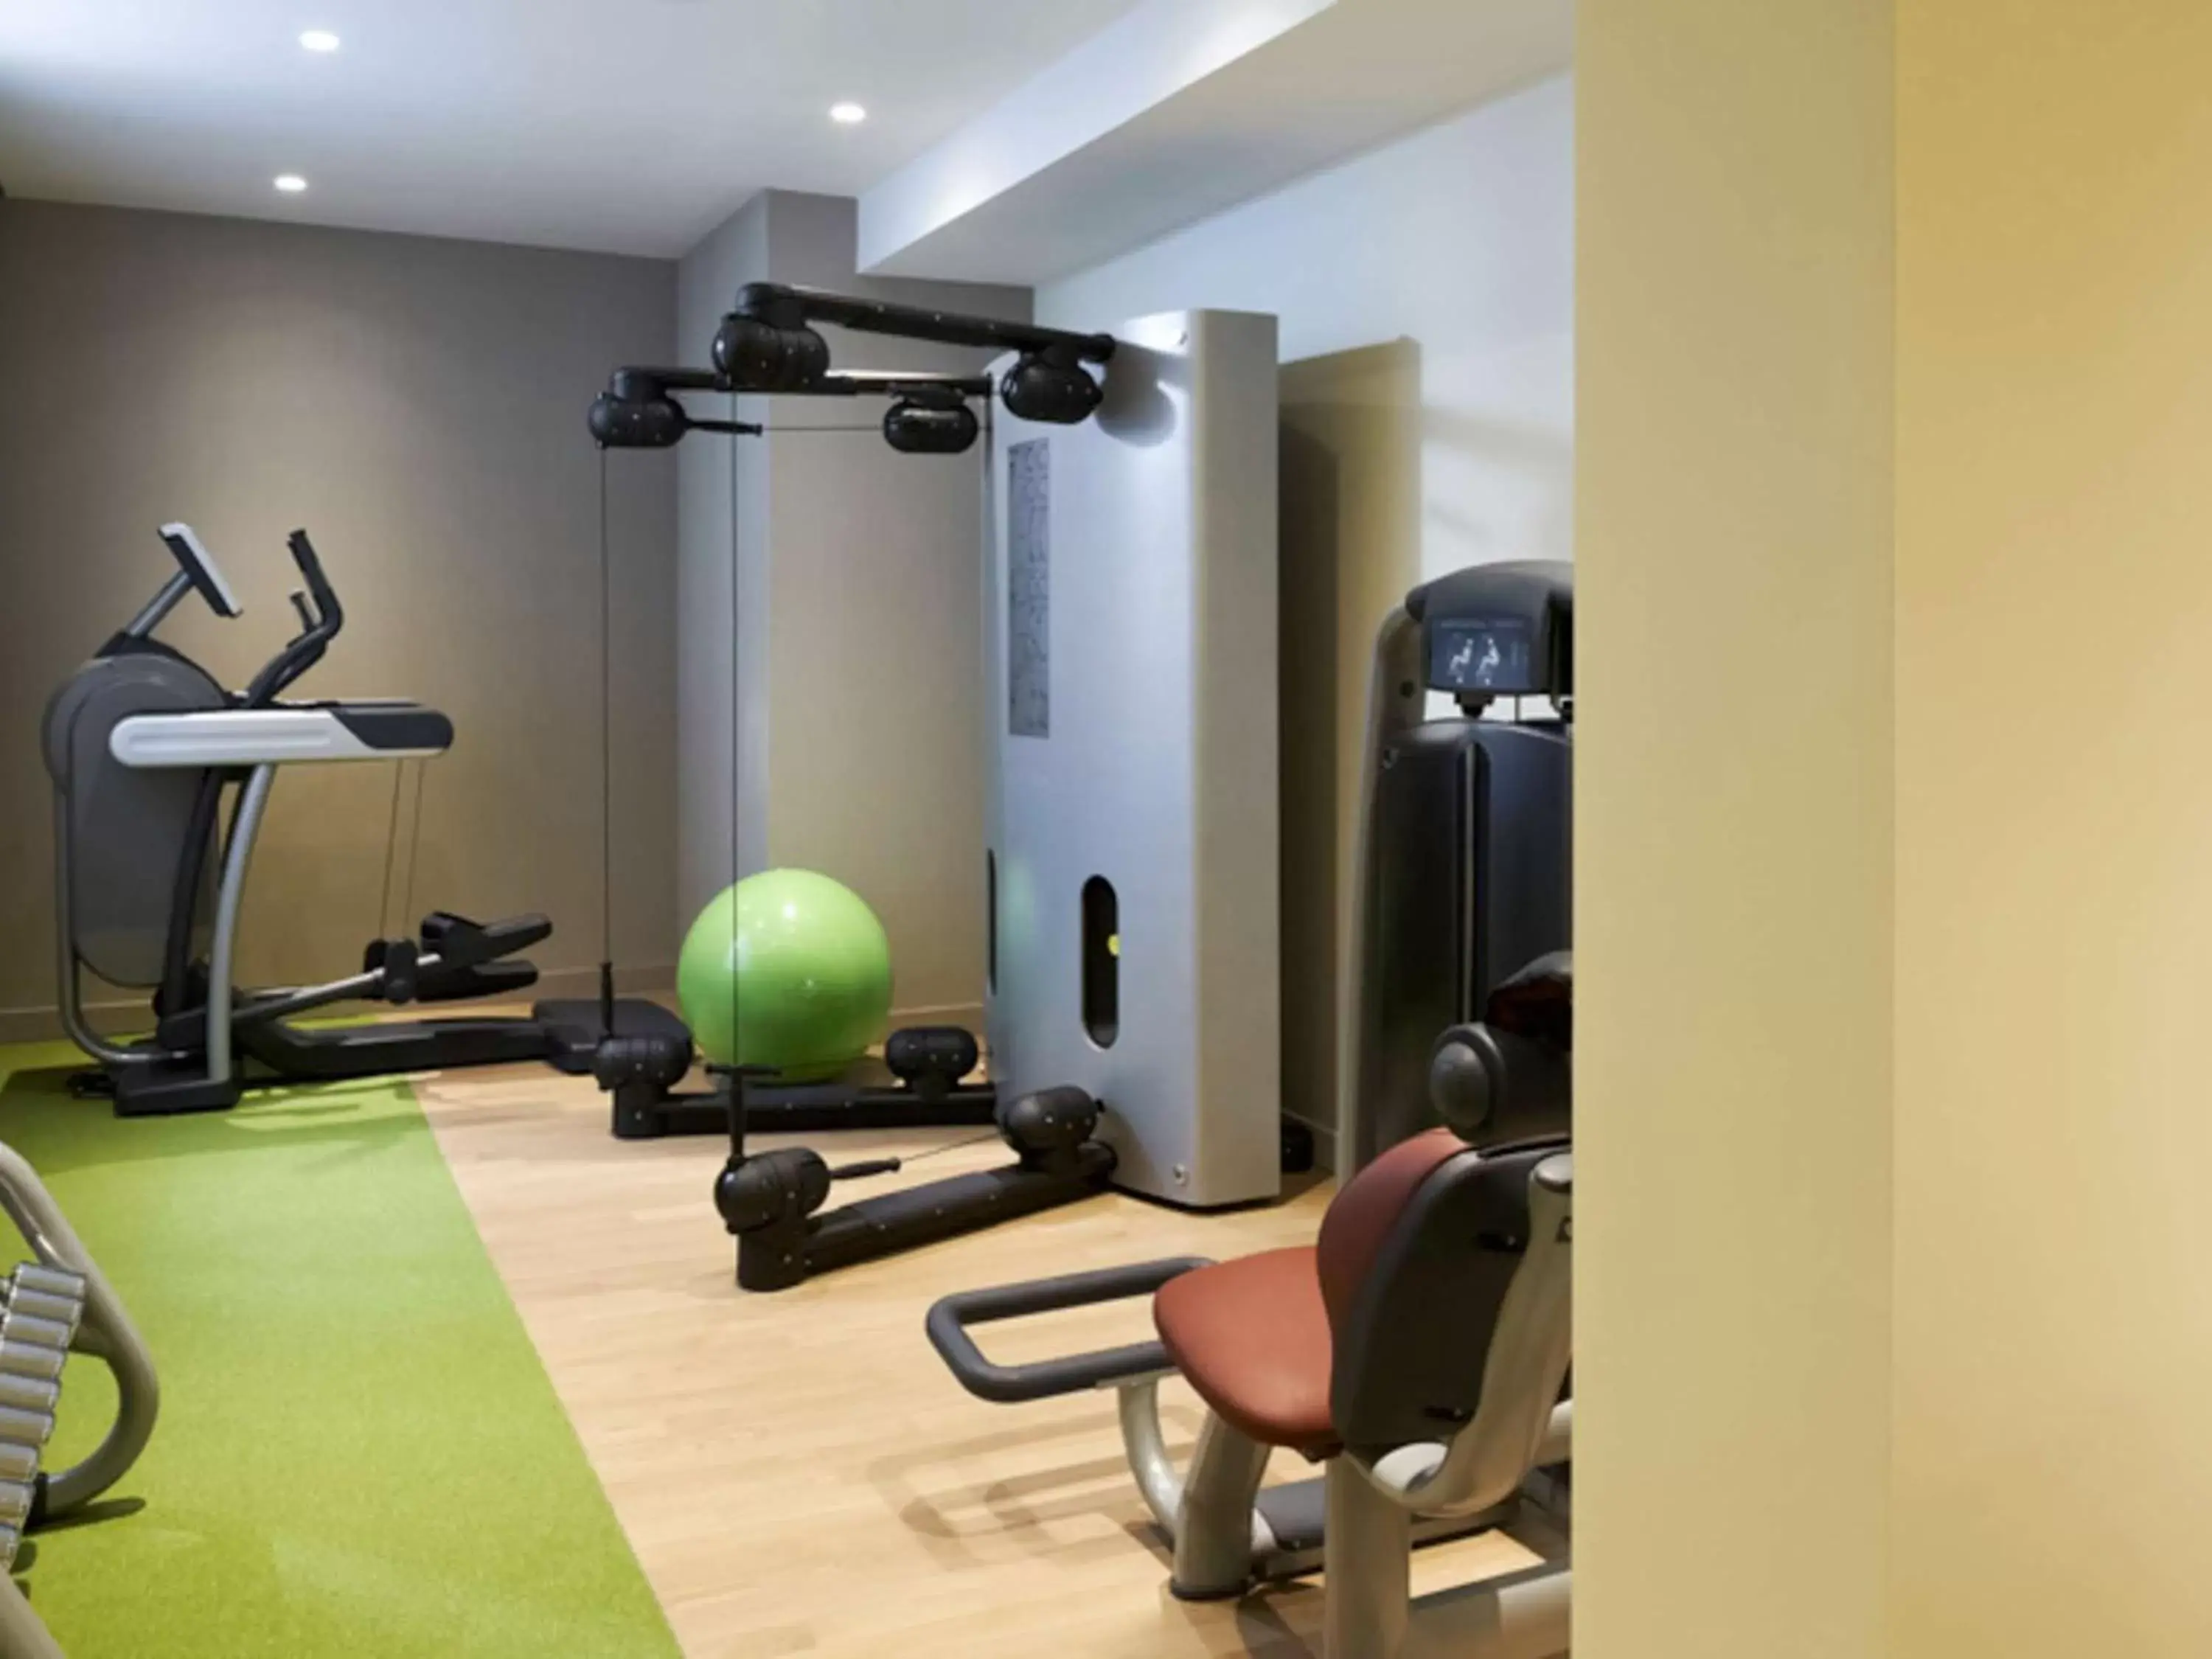 Fitness centre/facilities, Fitness Center/Facilities in Sofitel Paris Arc De Triomphe